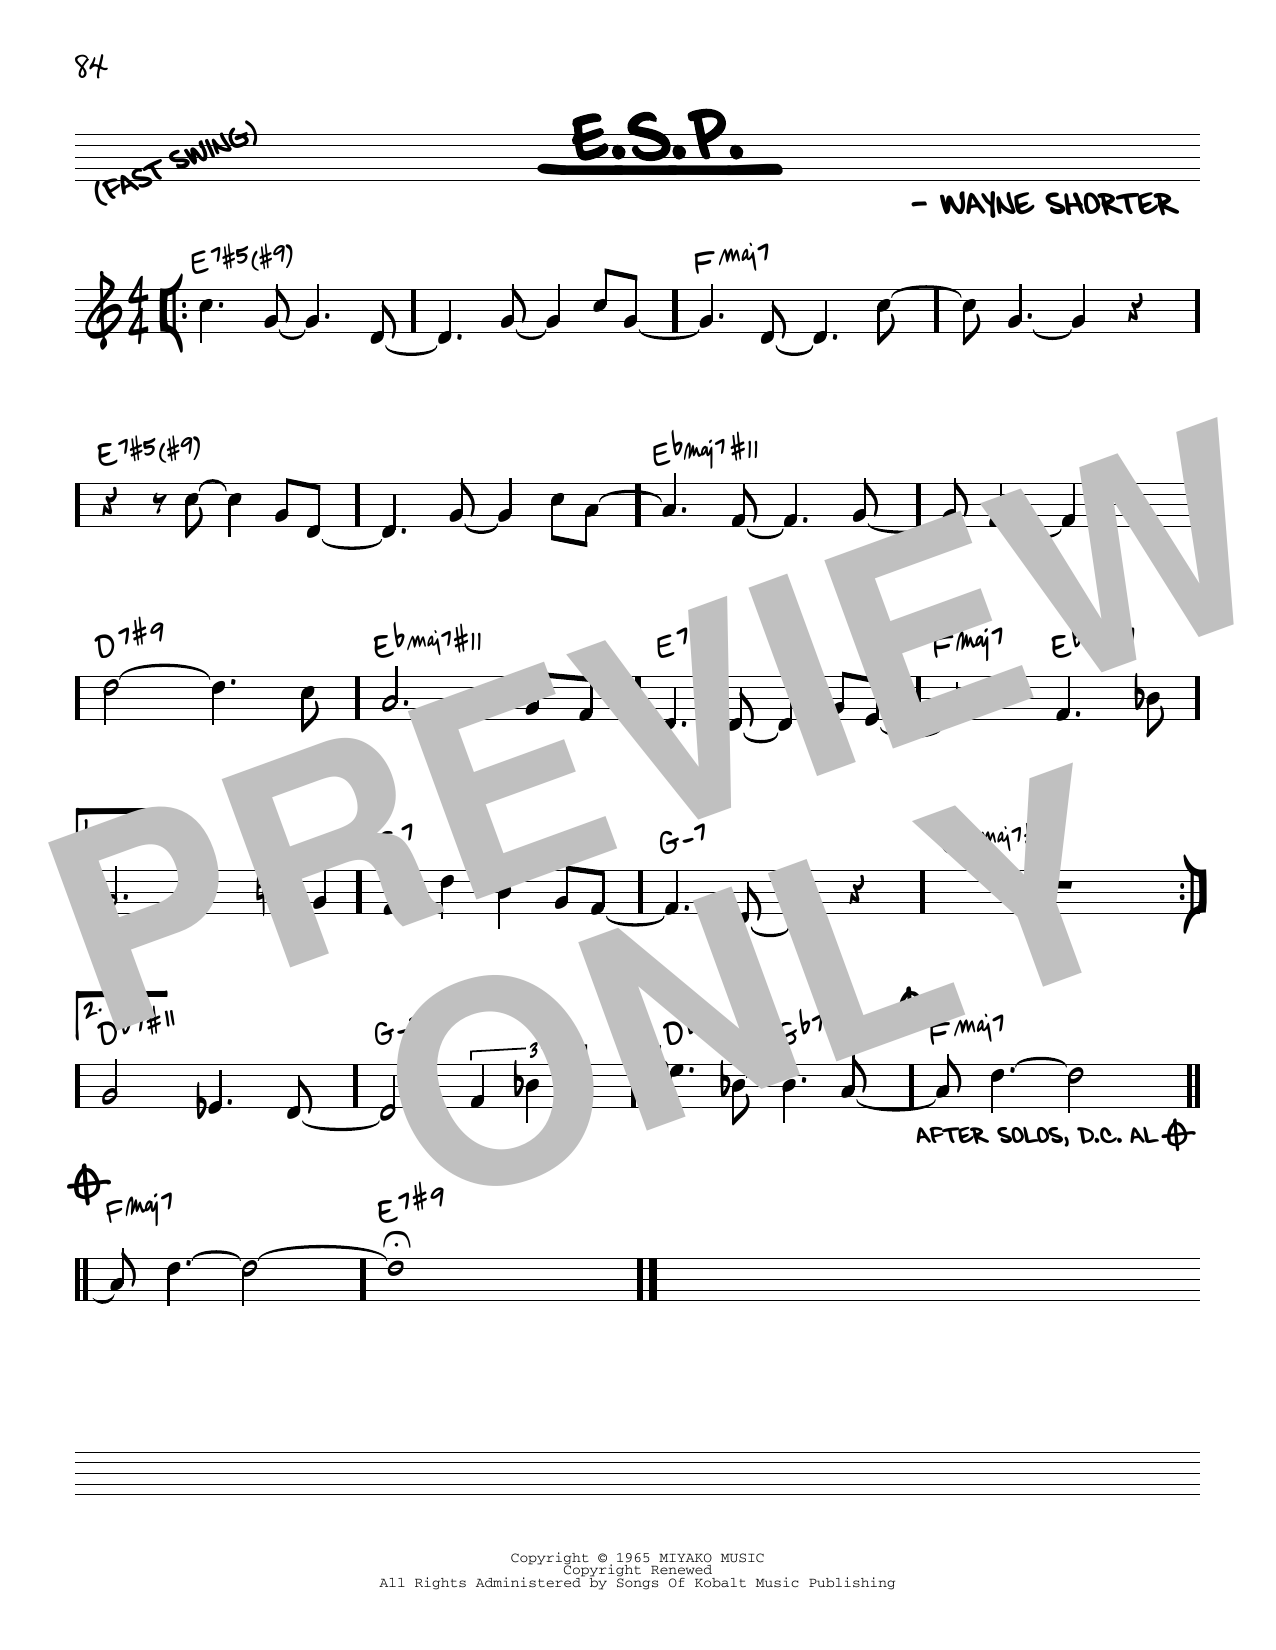 Wayne Shorter E.S.P. sheet music notes and chords arranged for Tenor Sax Transcription